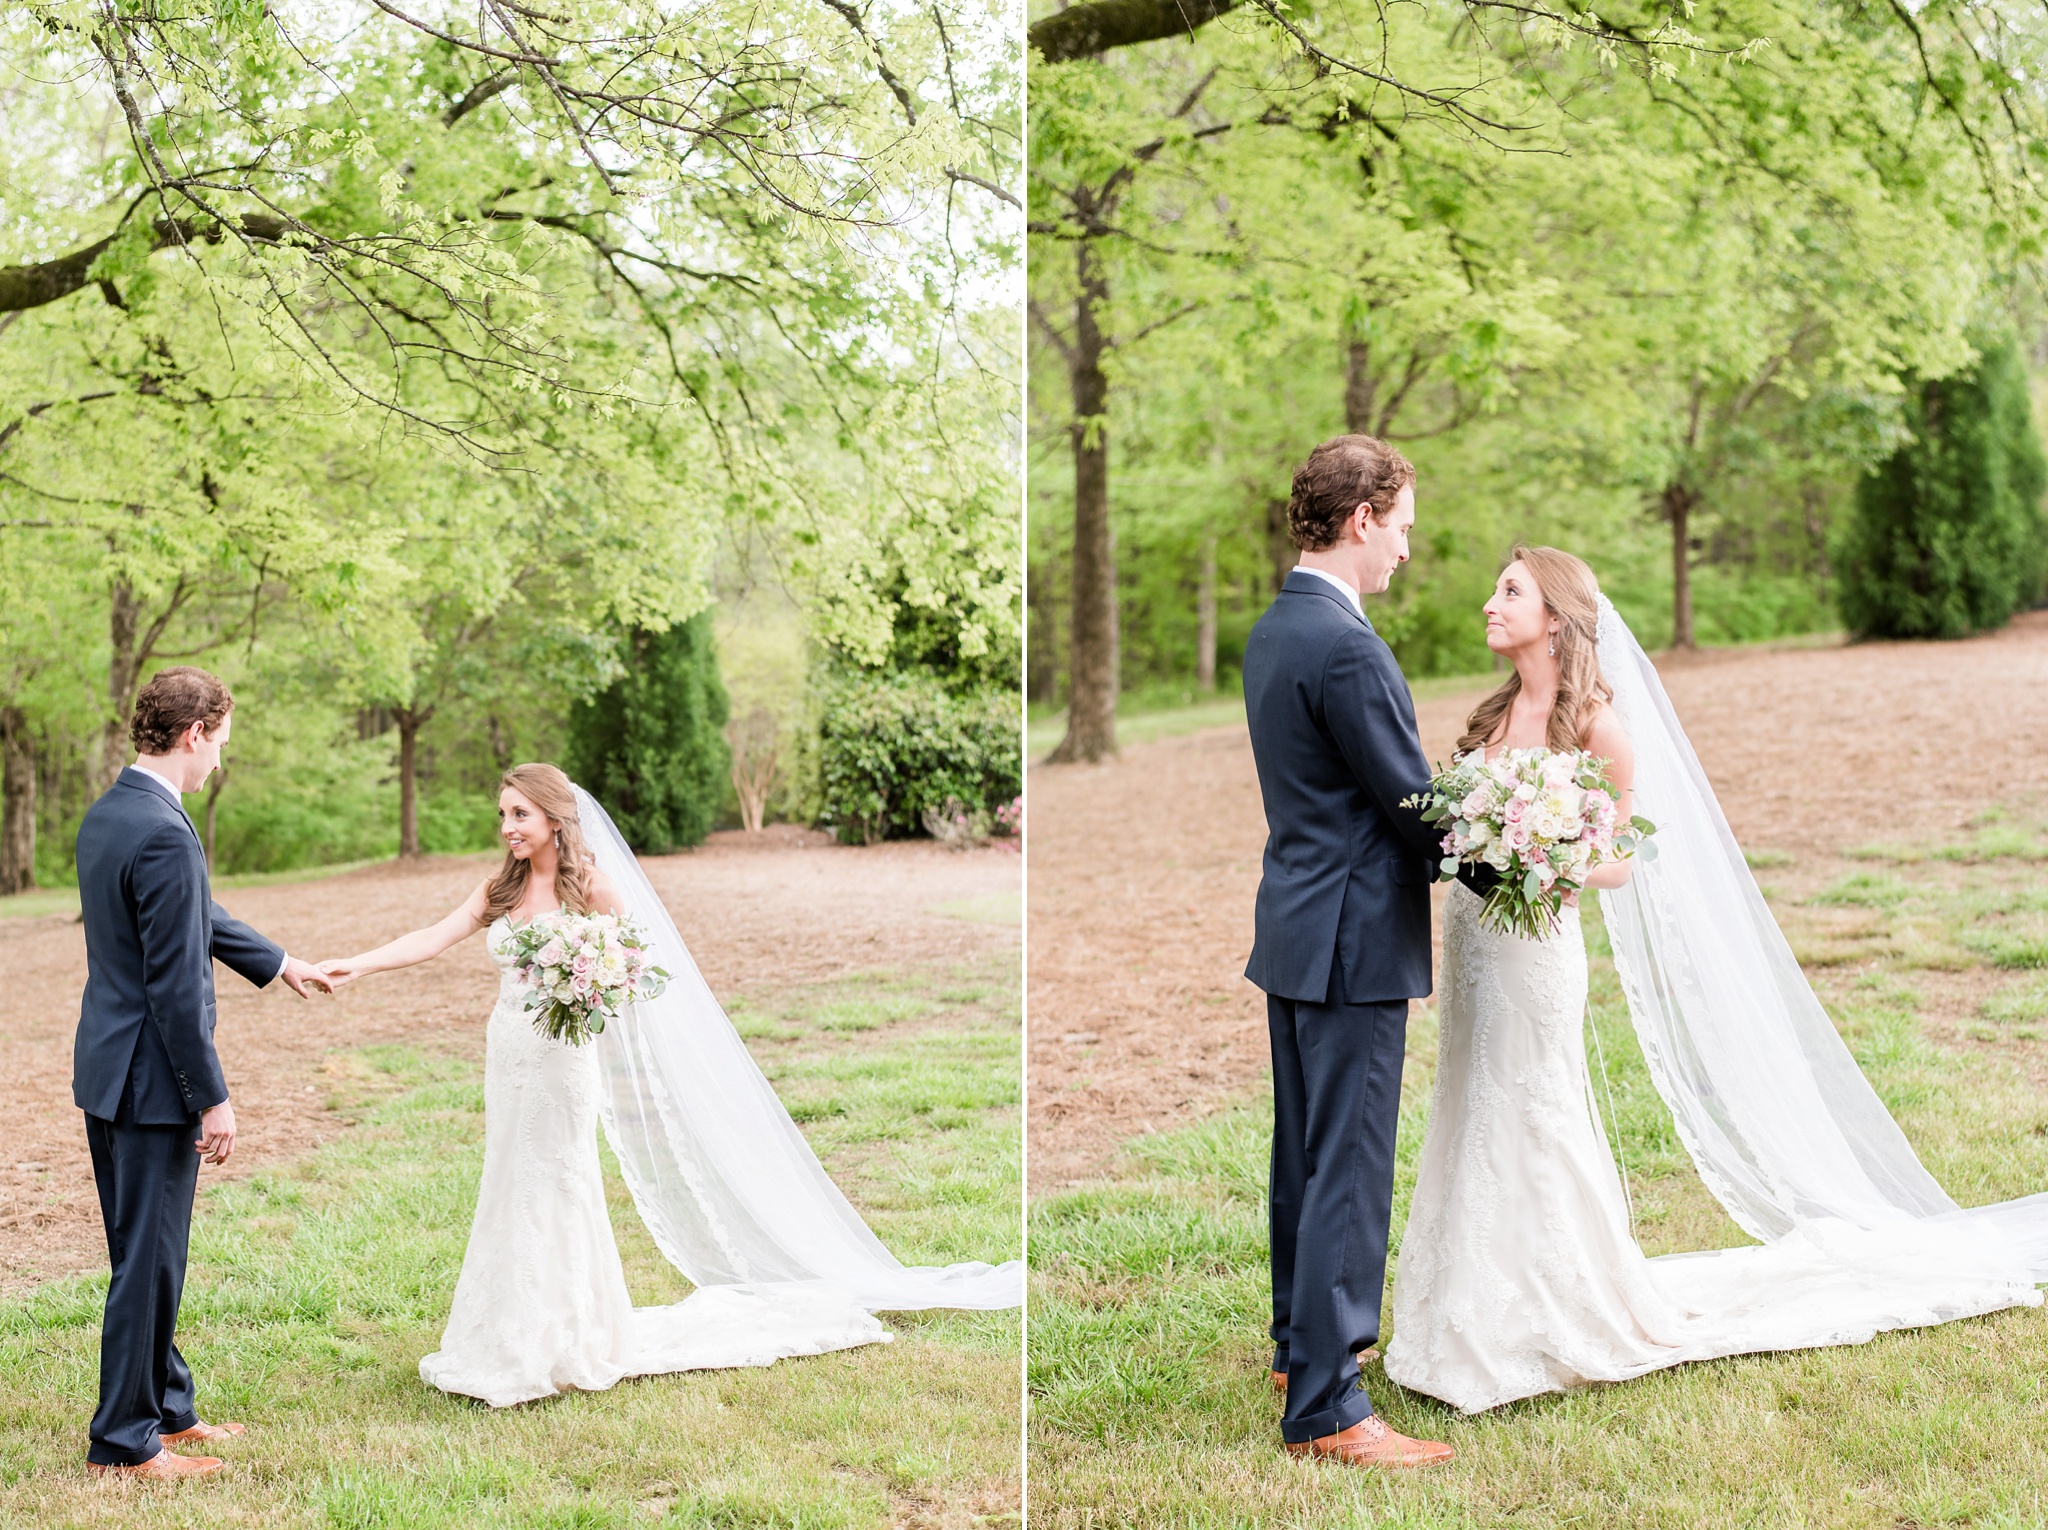 Sonnet House Blush and Gold Spring Wedding | Birmingham Alabama Wedding Photographers_0031.jpg